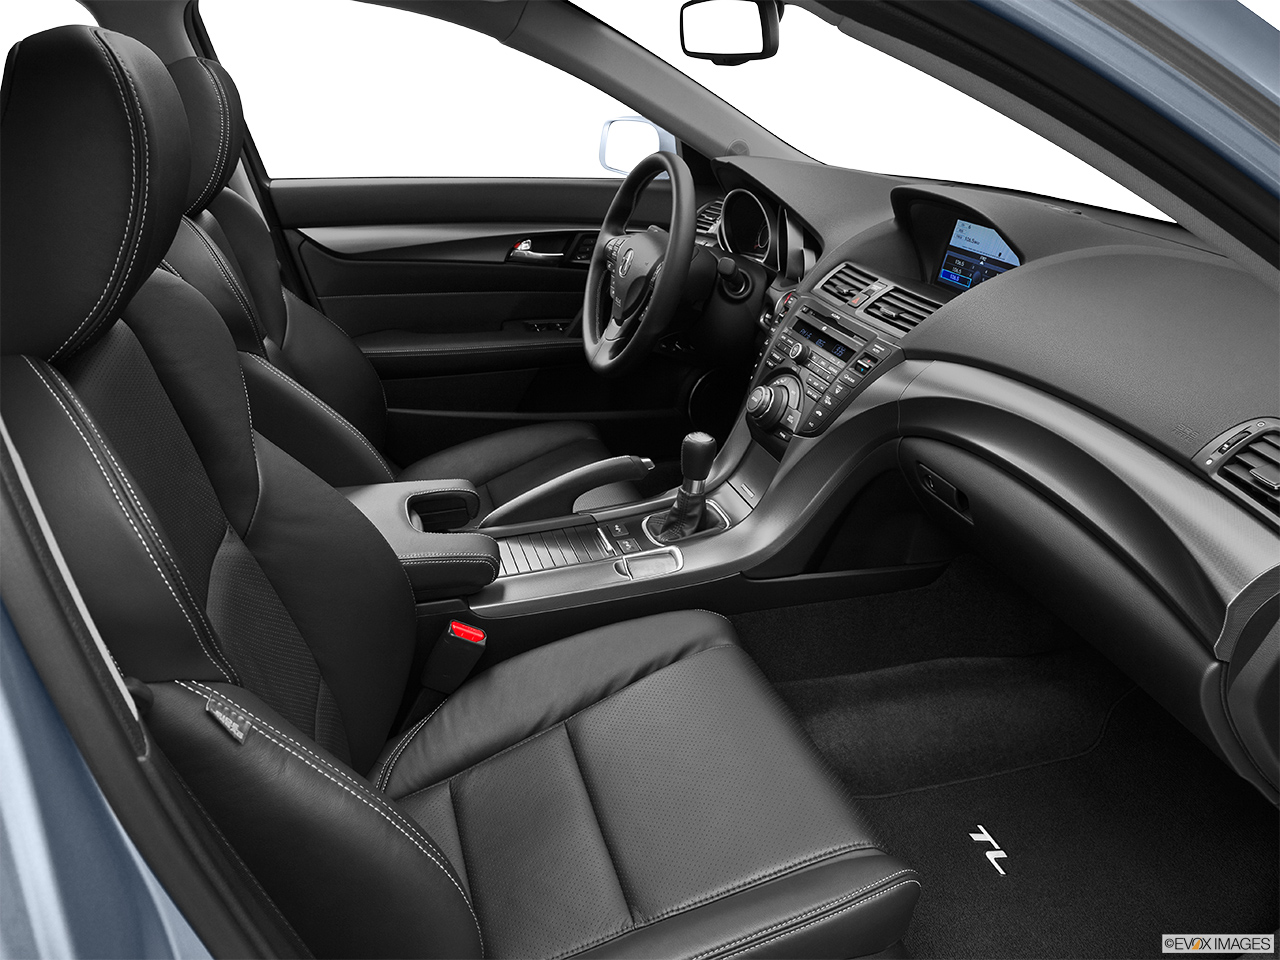 2013 Acura TL SH-AWD Passenger seat. 